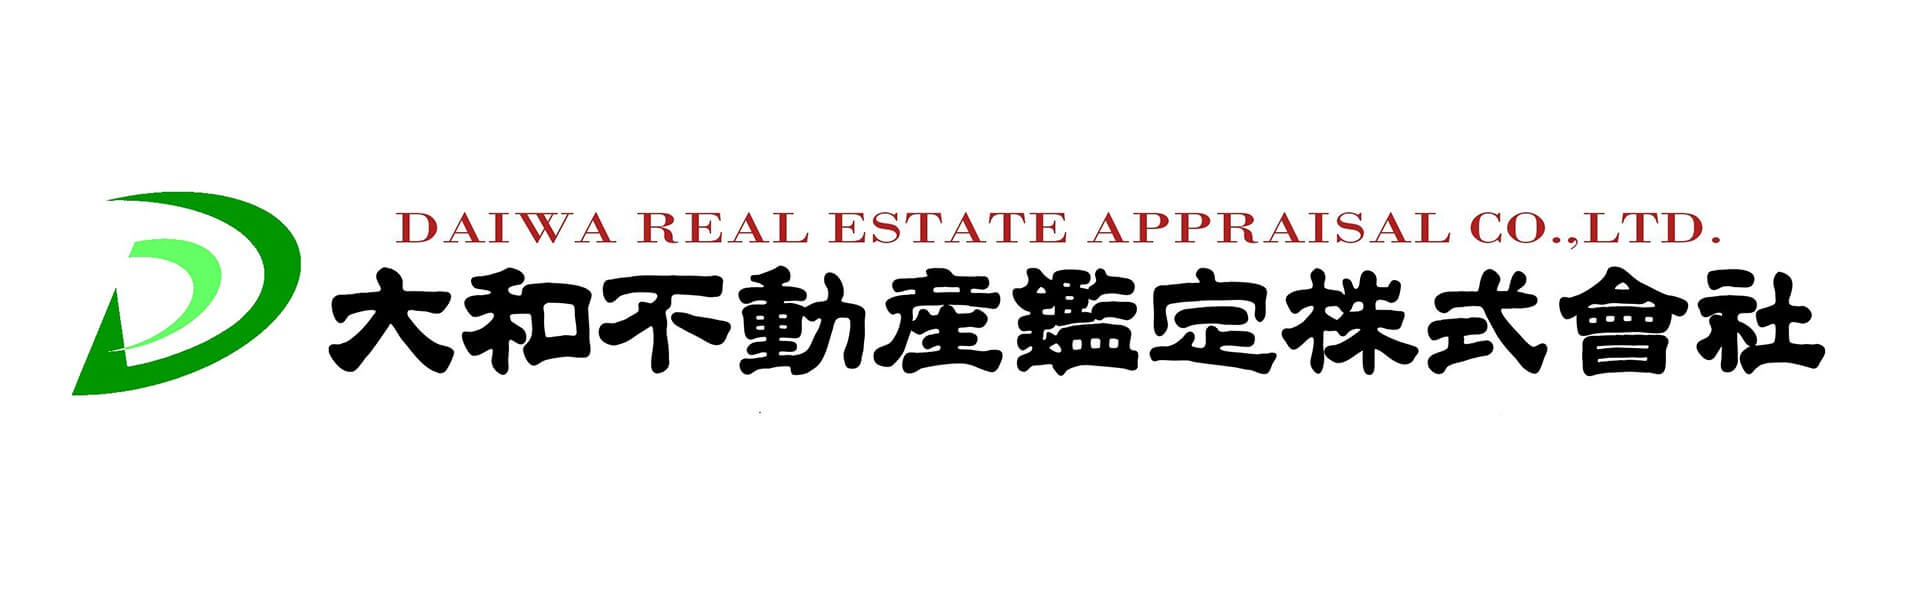 Daiwa Real Estate Appraisal Co Logo